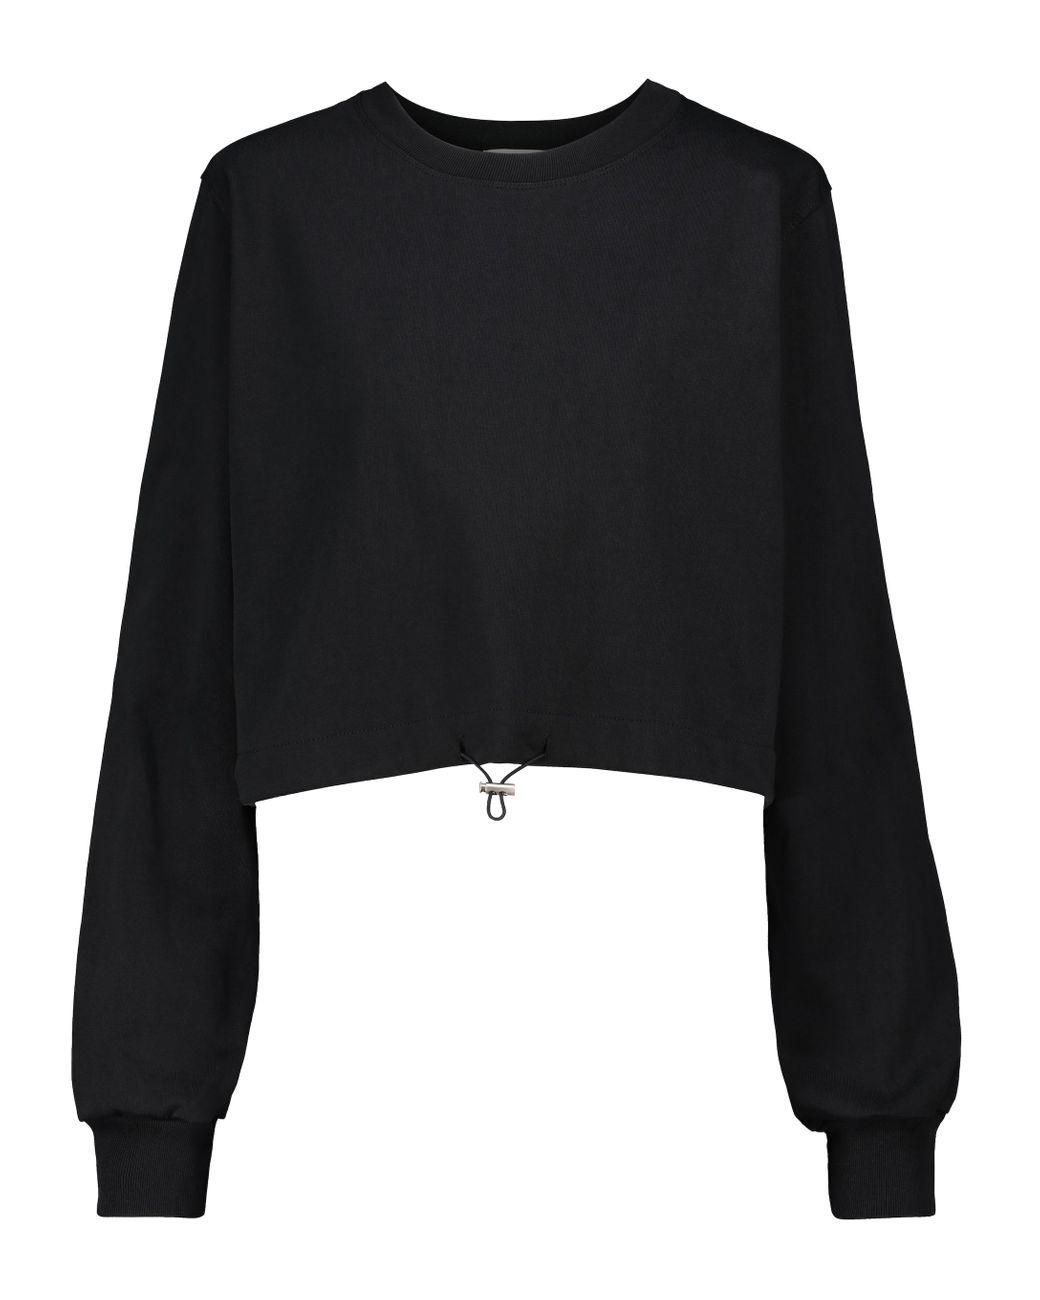 Frankie Shop Cropped Cotton Sweatshirt in Black - Lyst